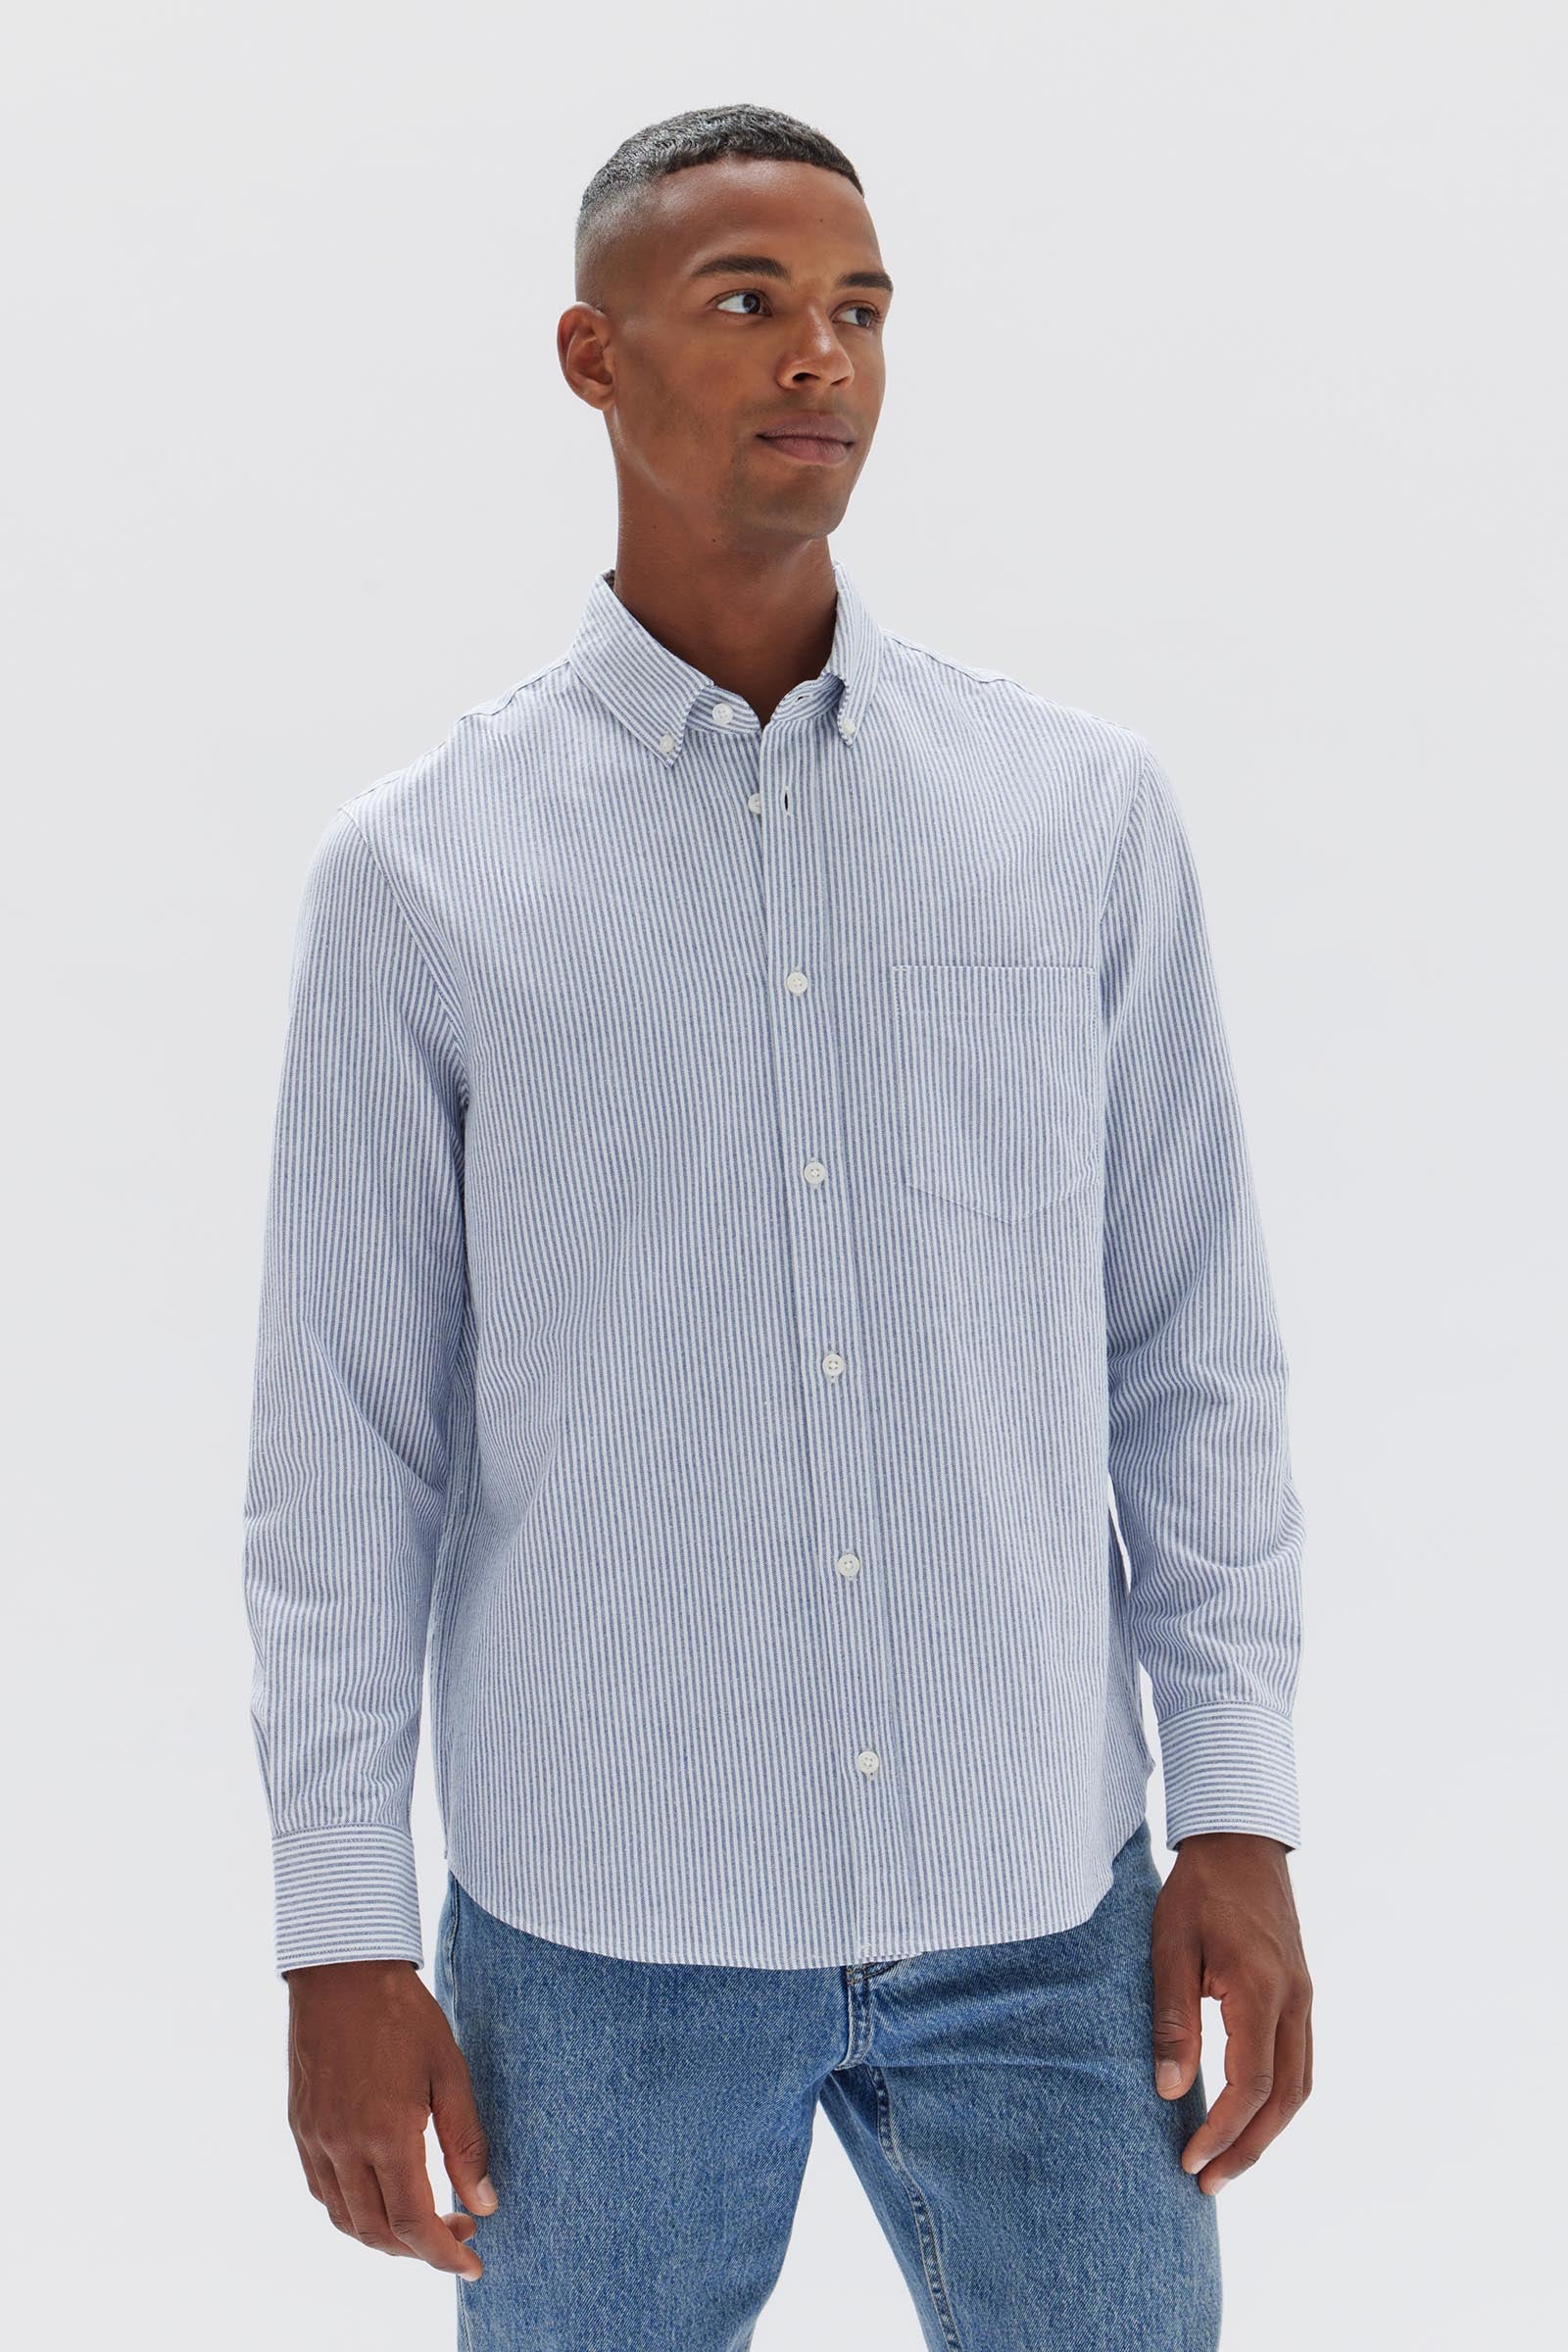 Men's Oxford Shirt in Variegated Blue & White Stripe